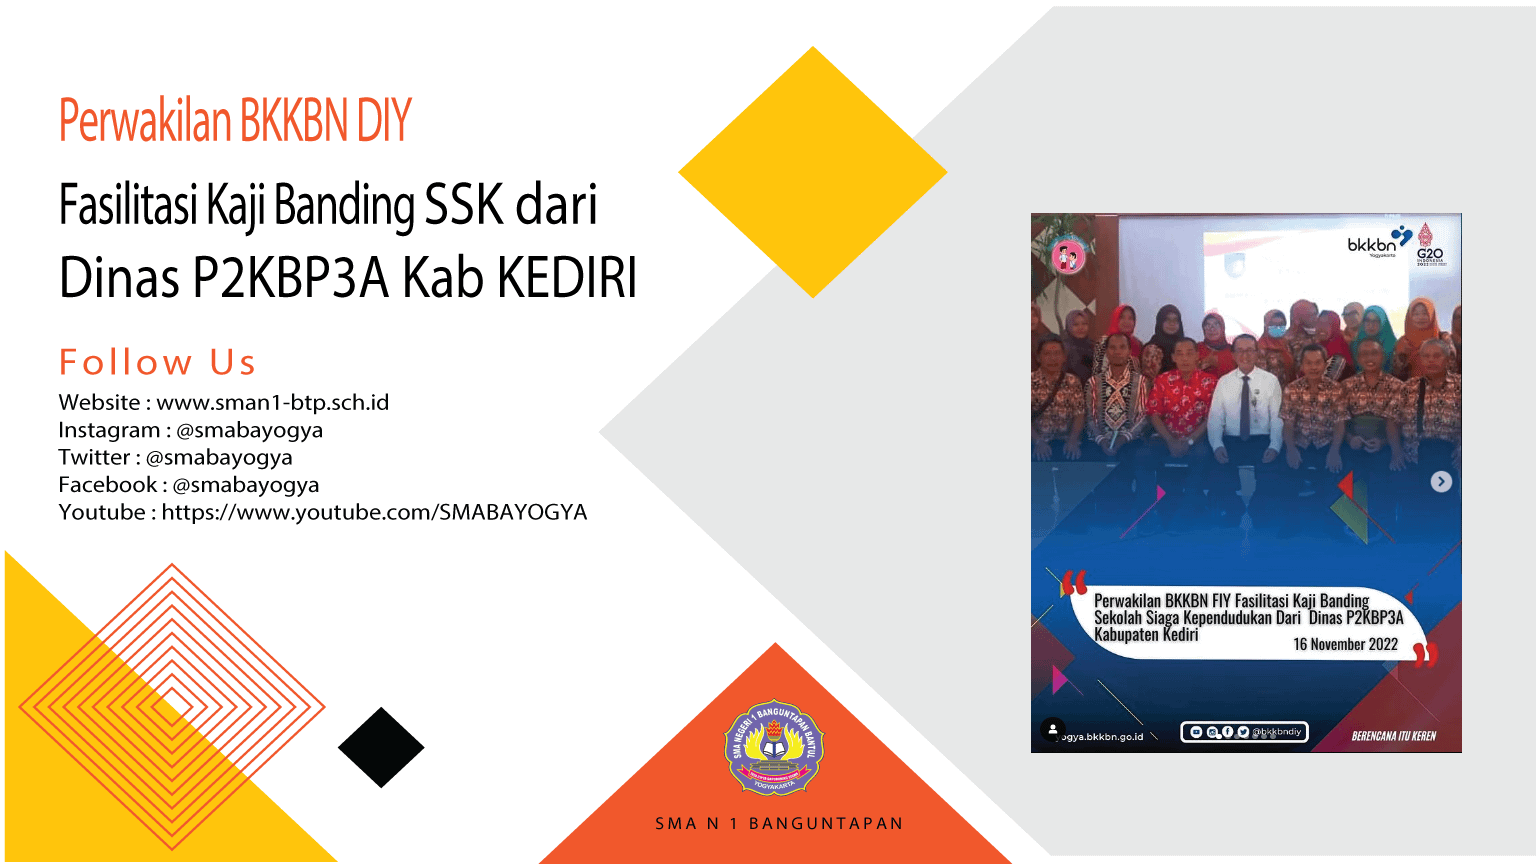 Perwakilan BKKBN DIY Fasilitasi Kaji Banding SSK dari Dinas P2KBP3A Kab KEDIRI